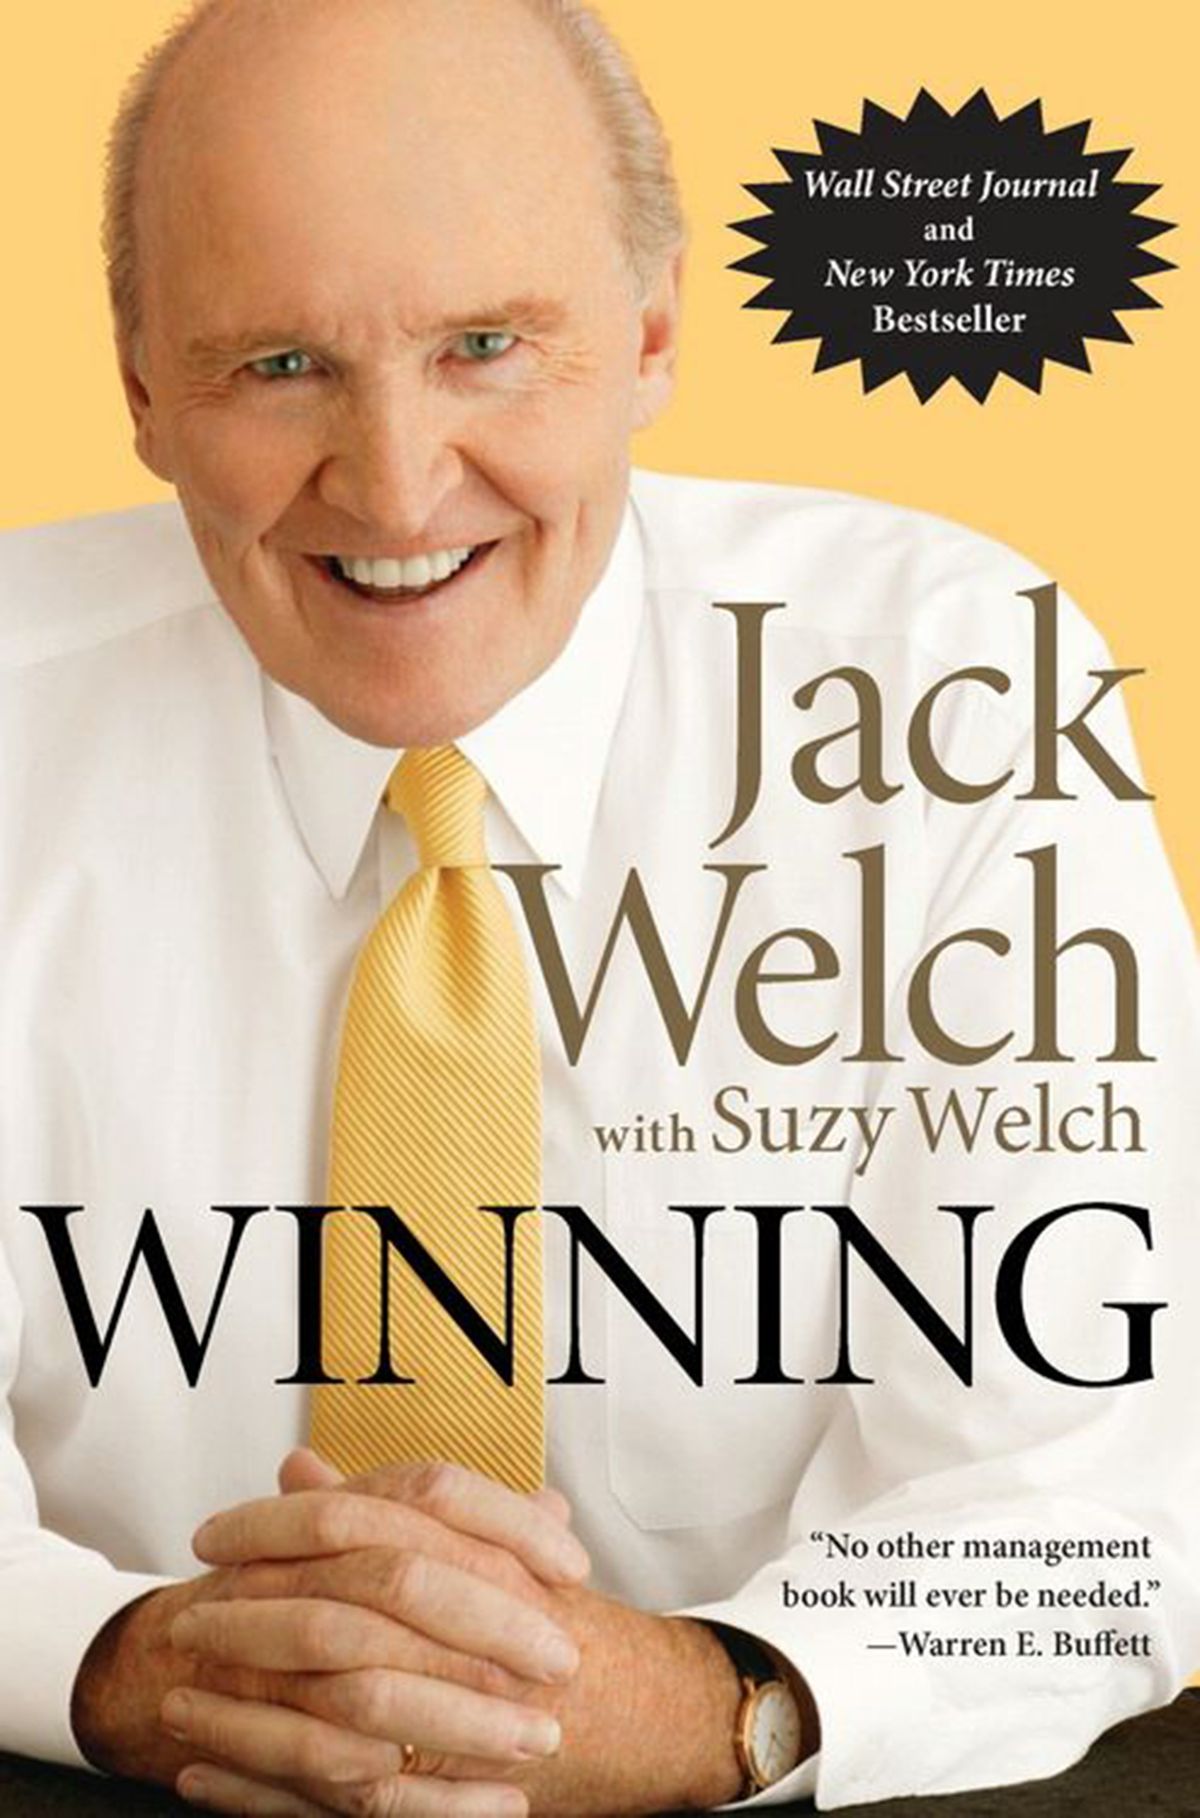 Jack Welch - Winning